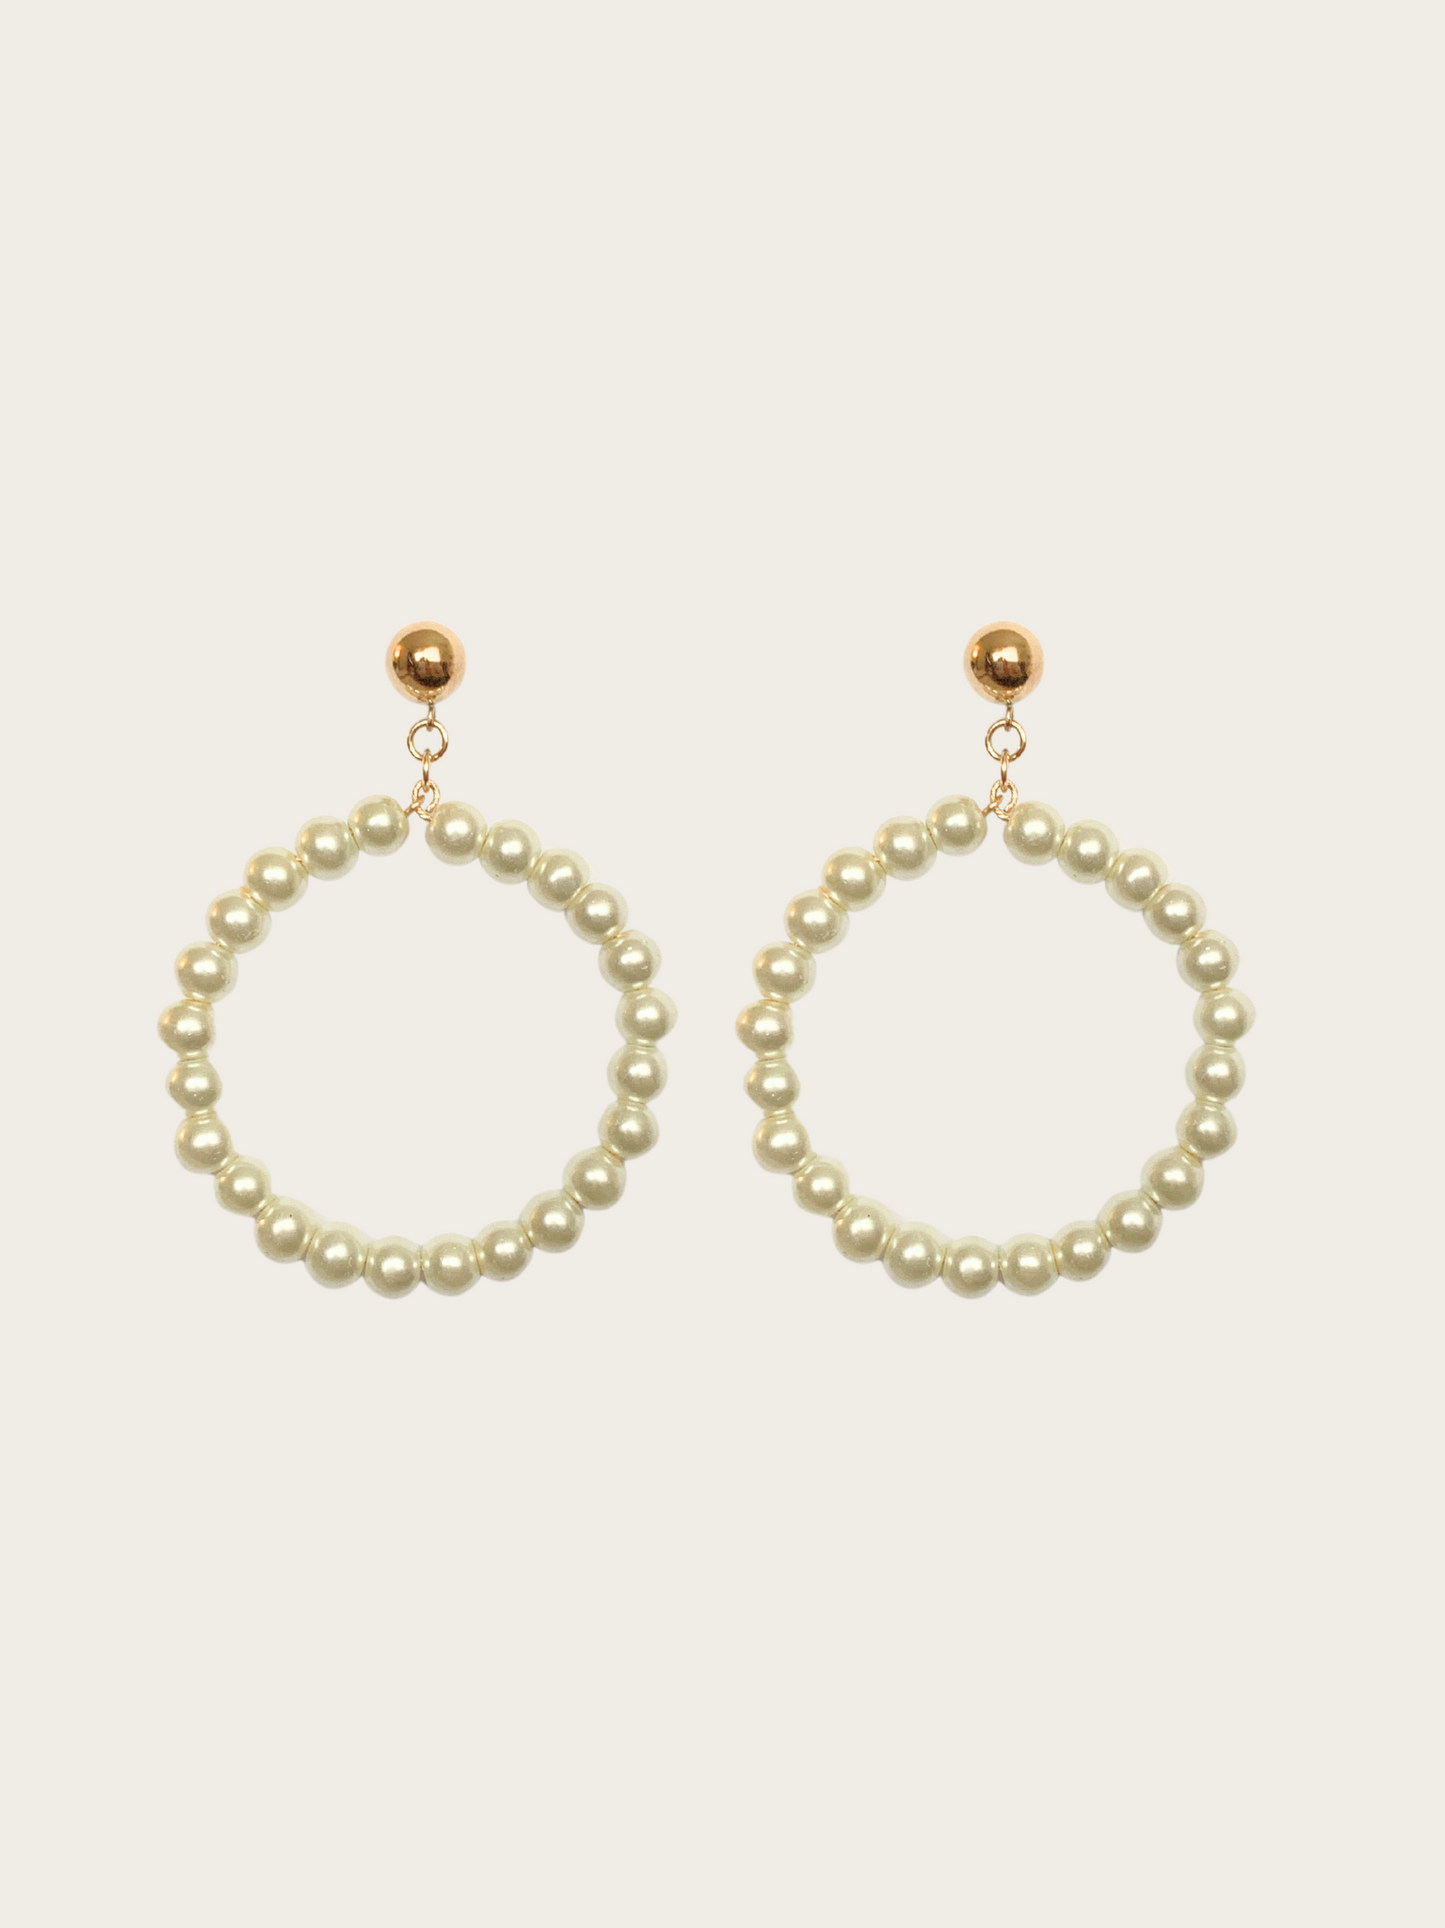 Clarita Earrings in Pearl